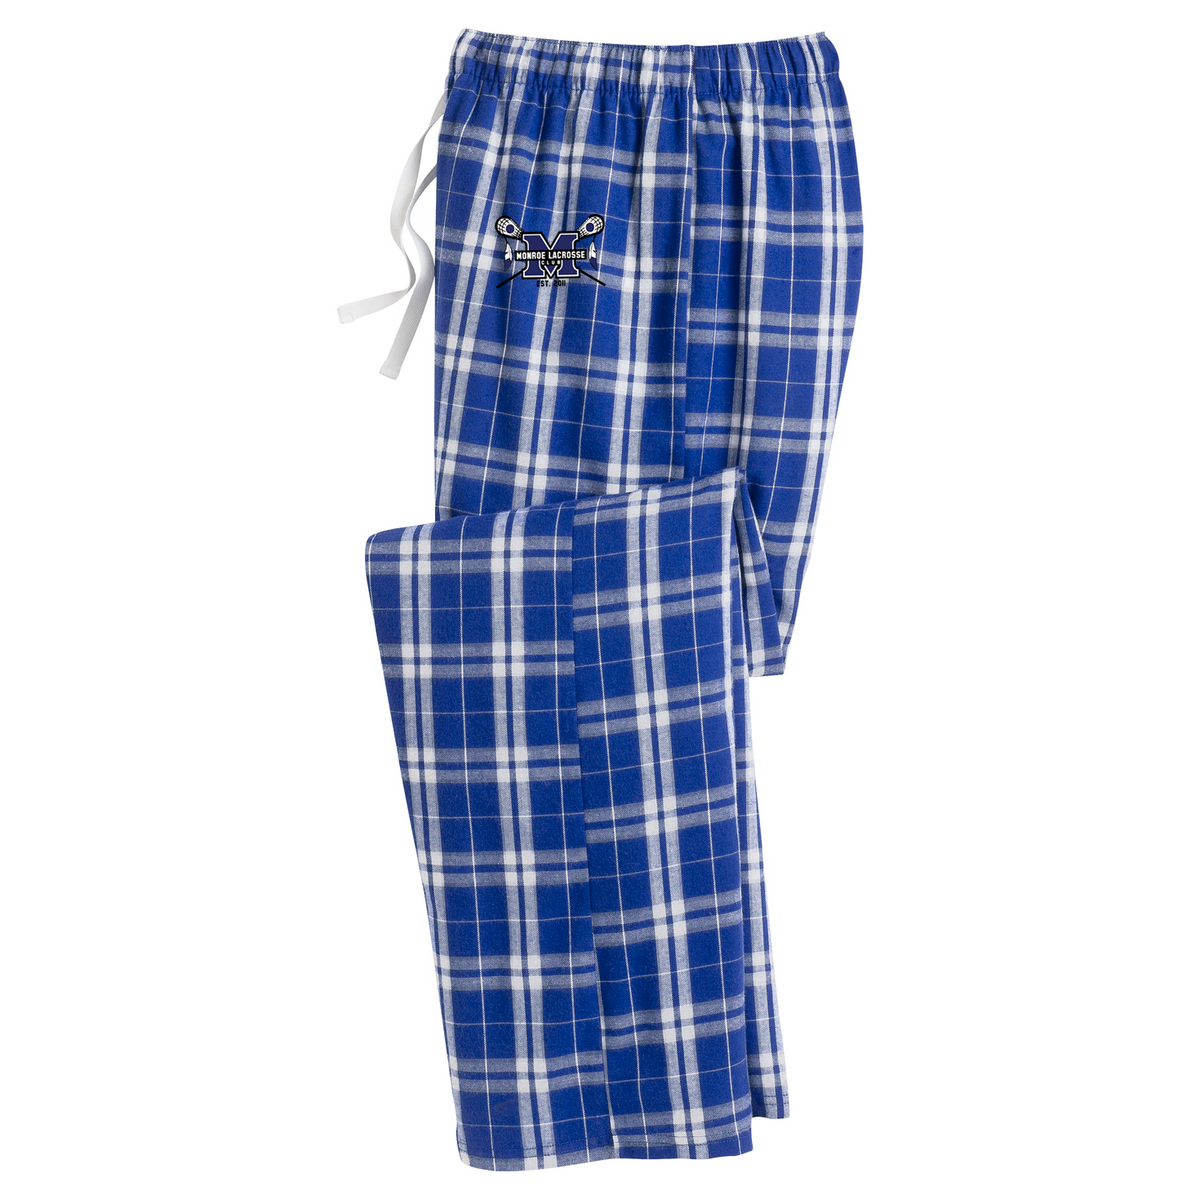 Monroe Braves Plaid Pajama Pants